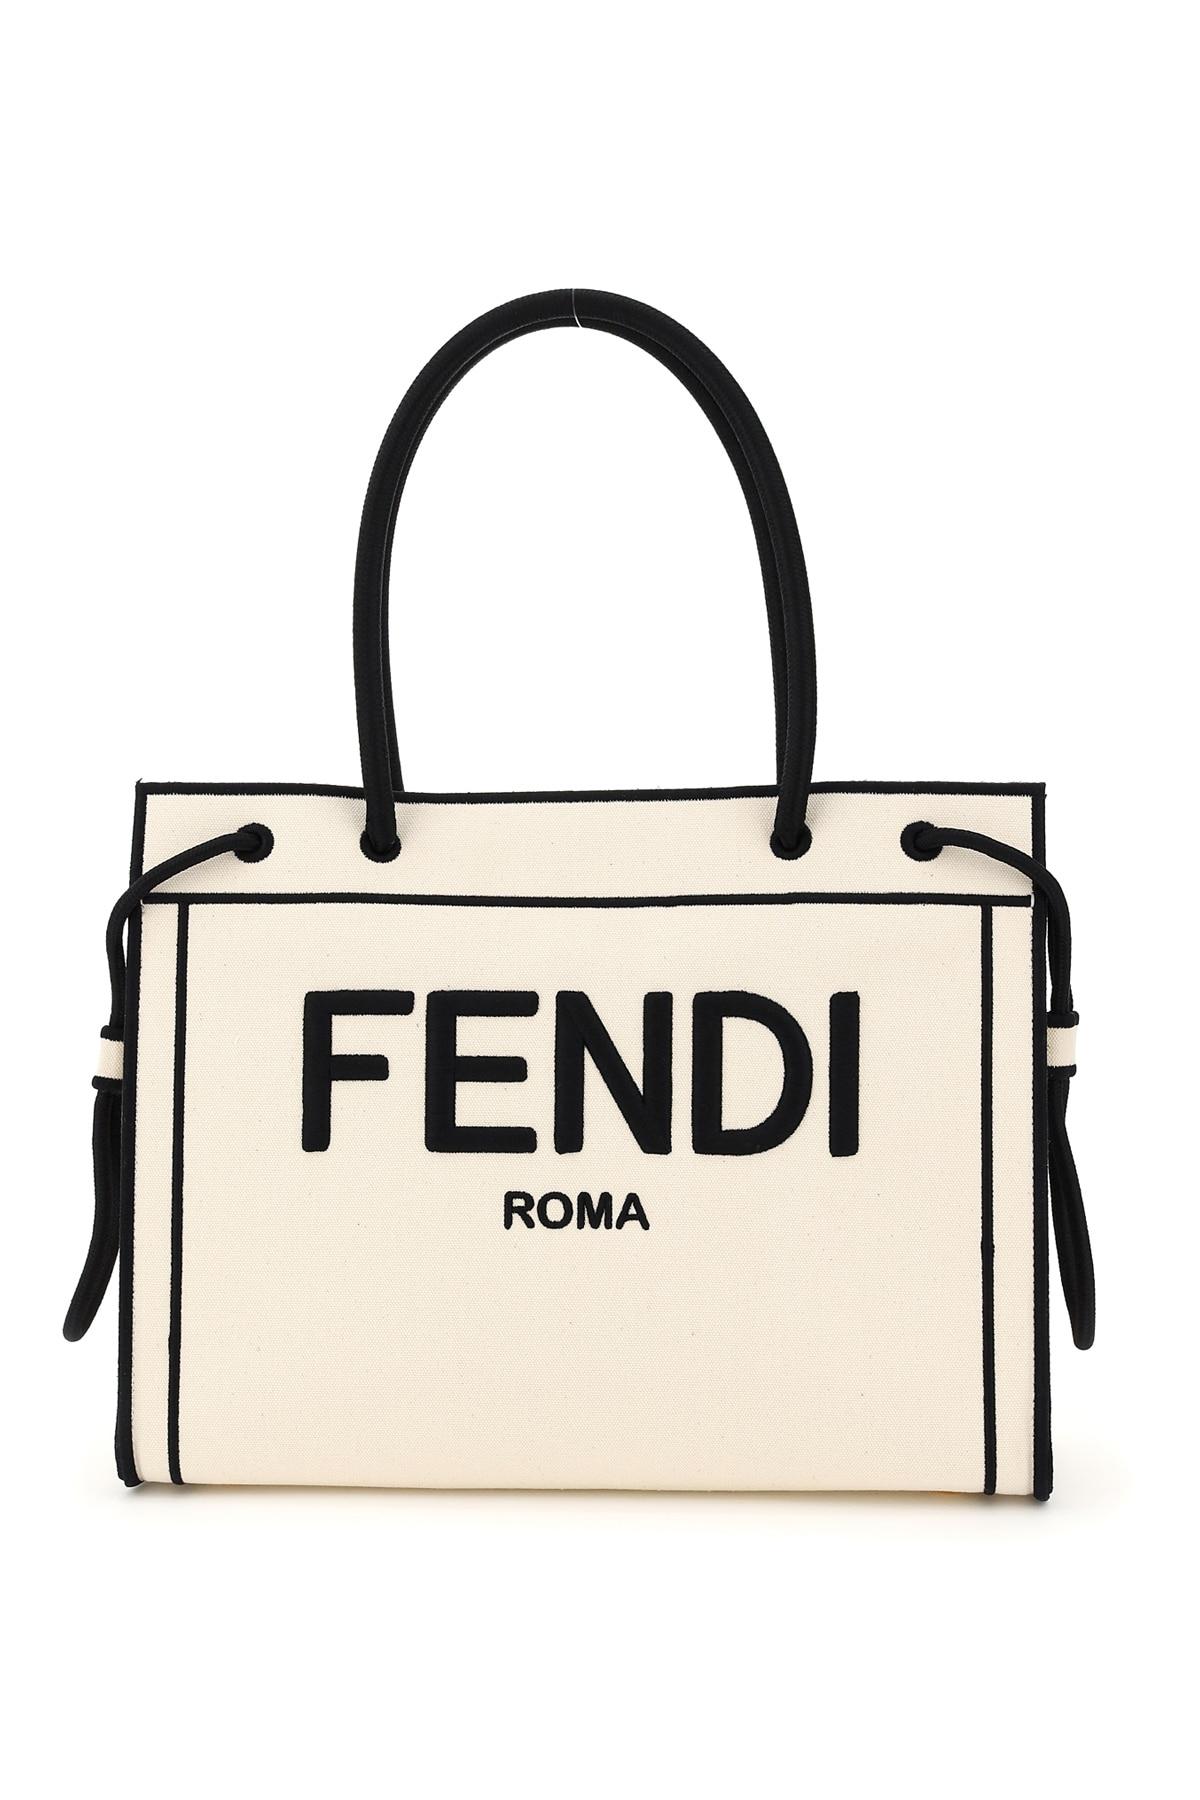 Fendi Canvas Tote Bag With Roma Embroidery in White,Black (Black 